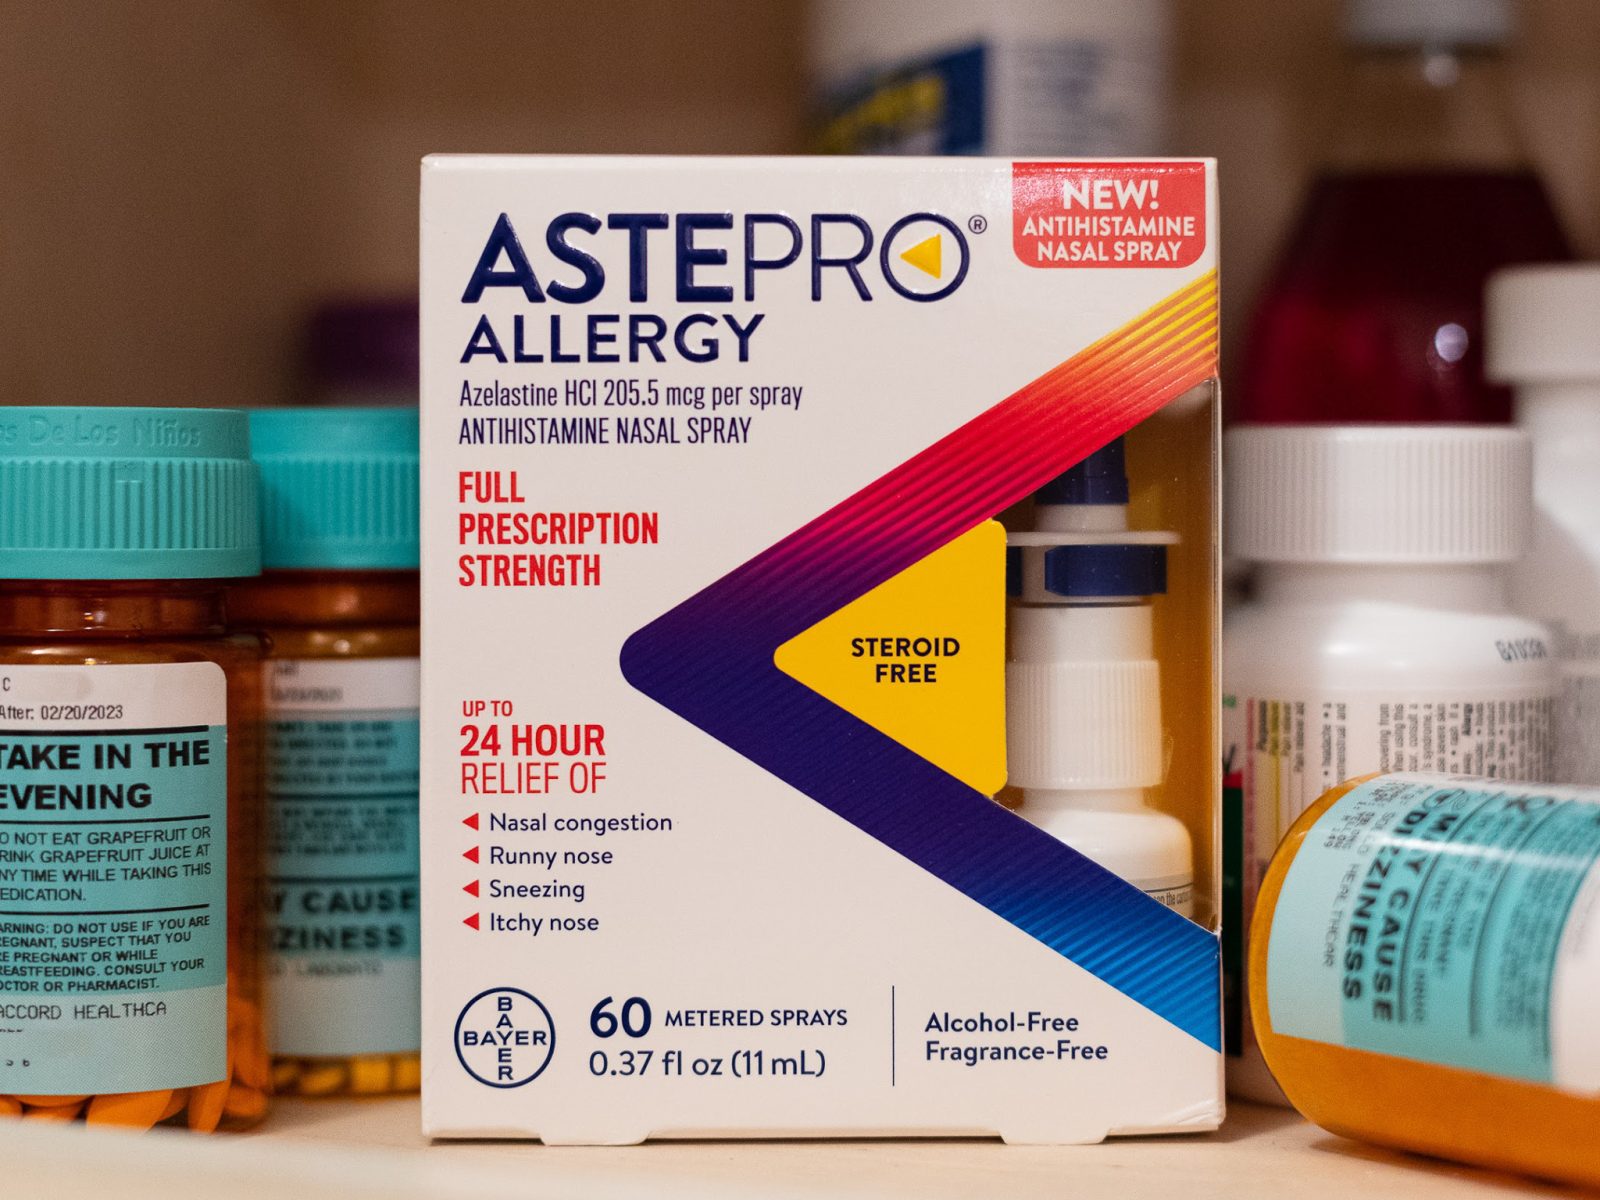 New AstePro Allergy Nasal Spray Just $7.99 At Publix (Regular Price $18.99)